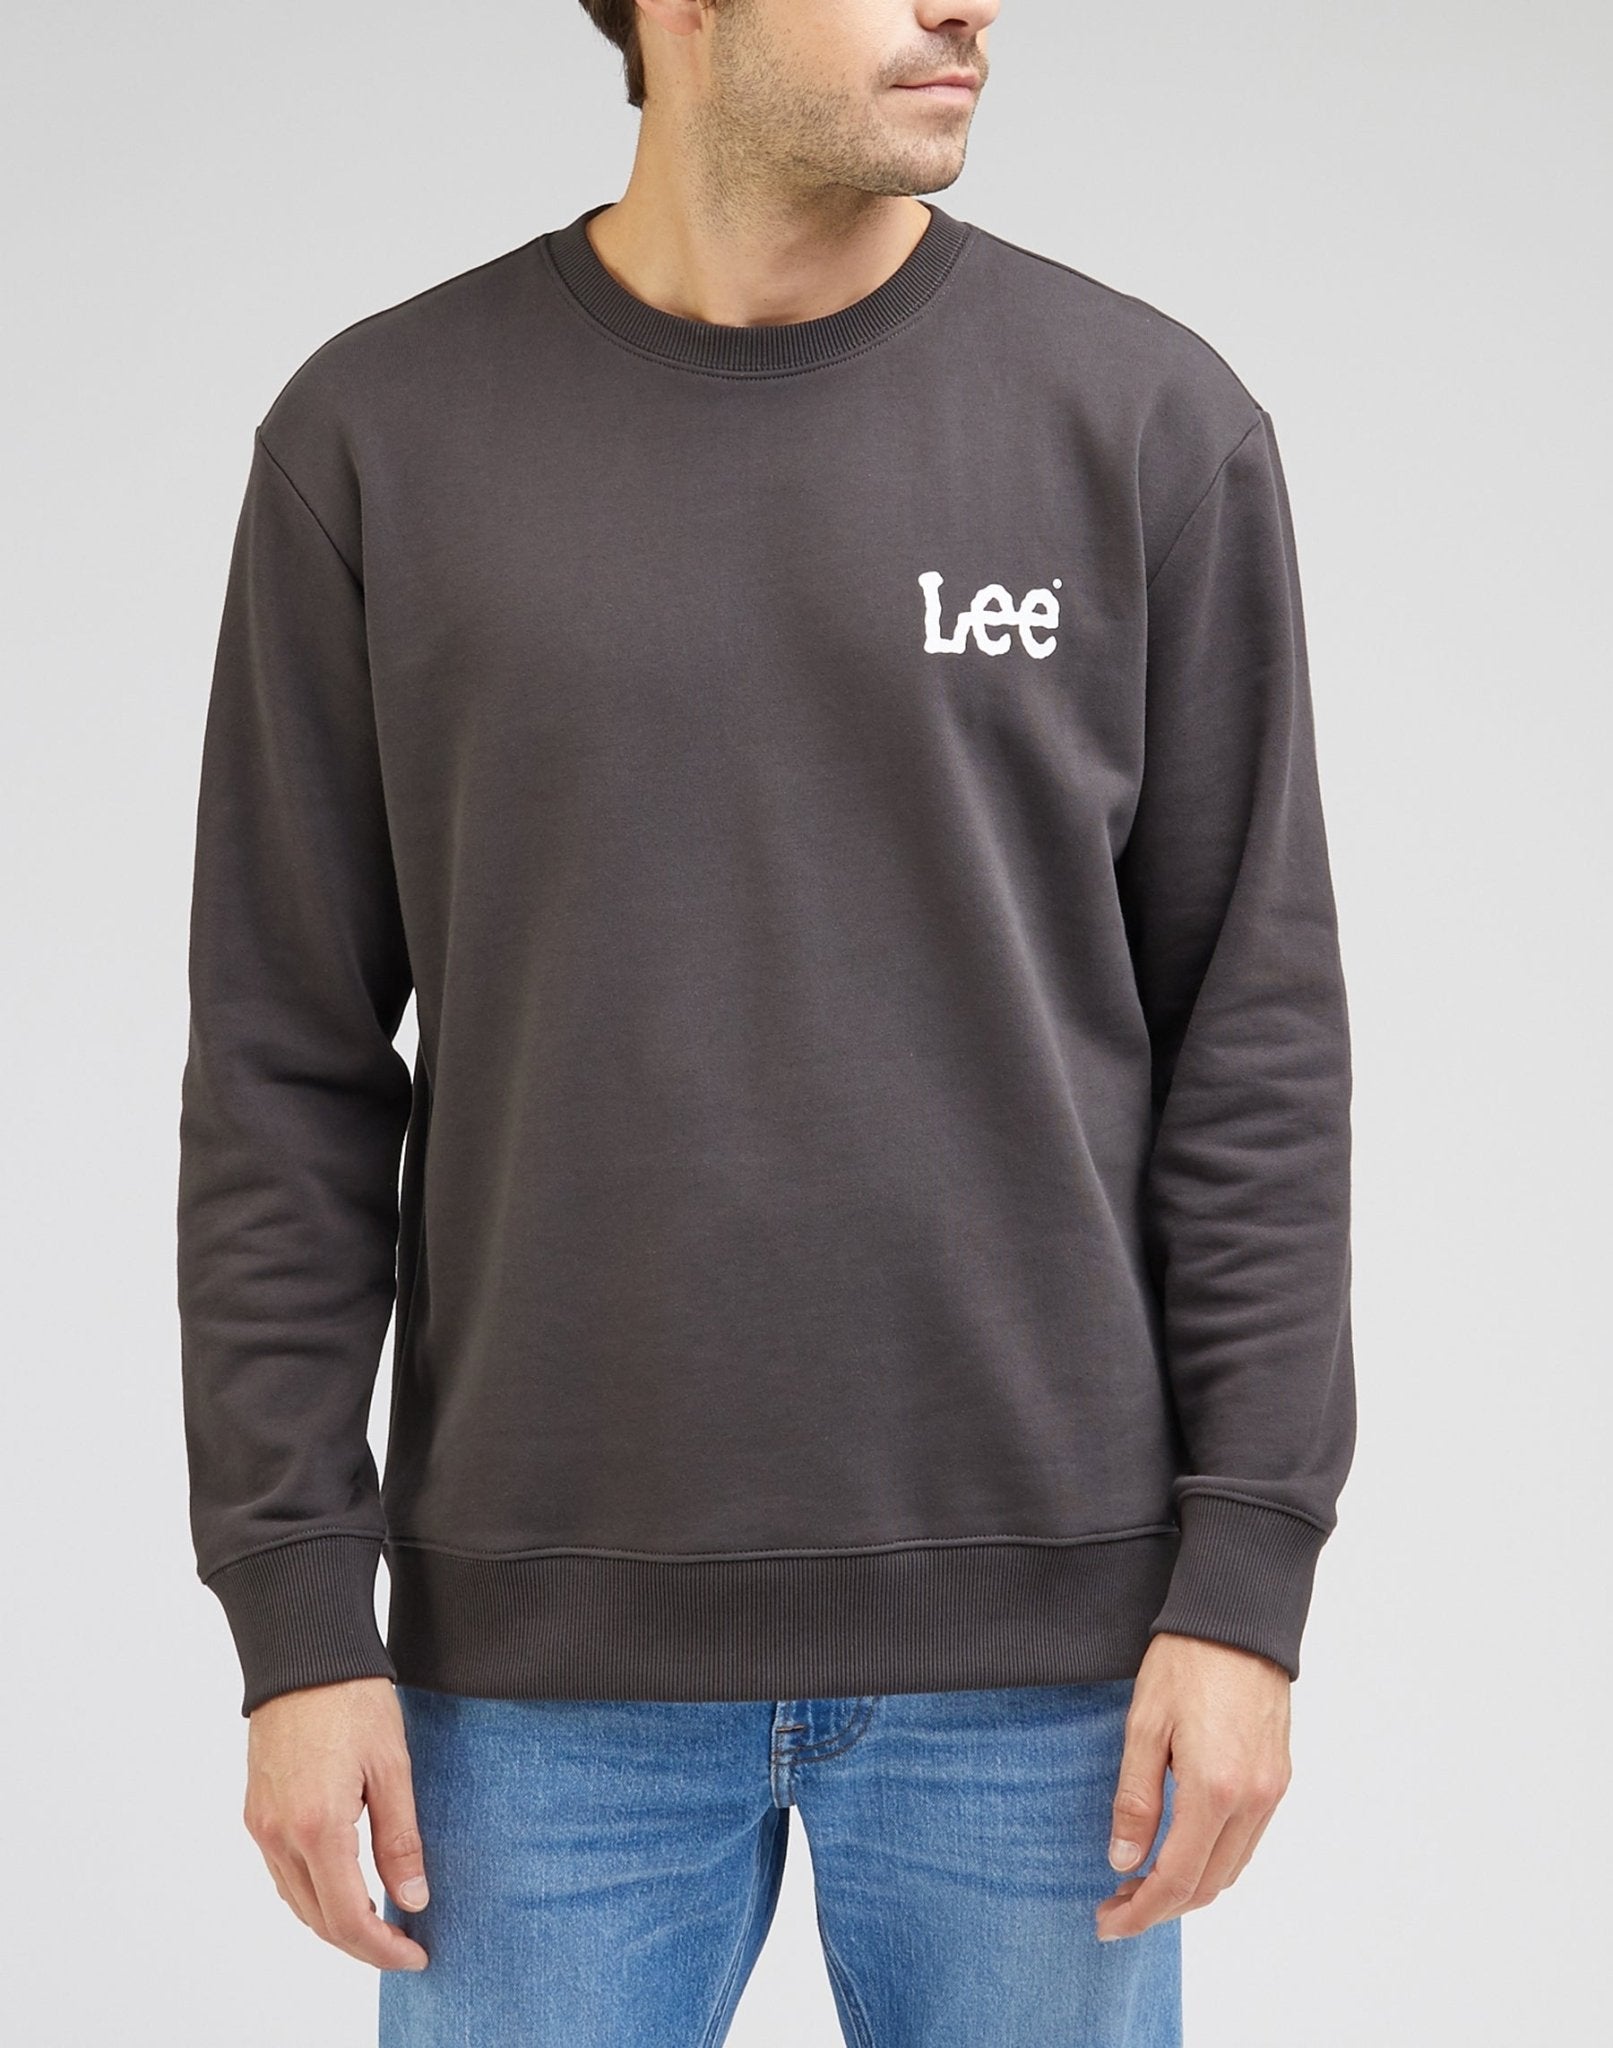 Wobbly Lee Sweatshirt in Washed Black